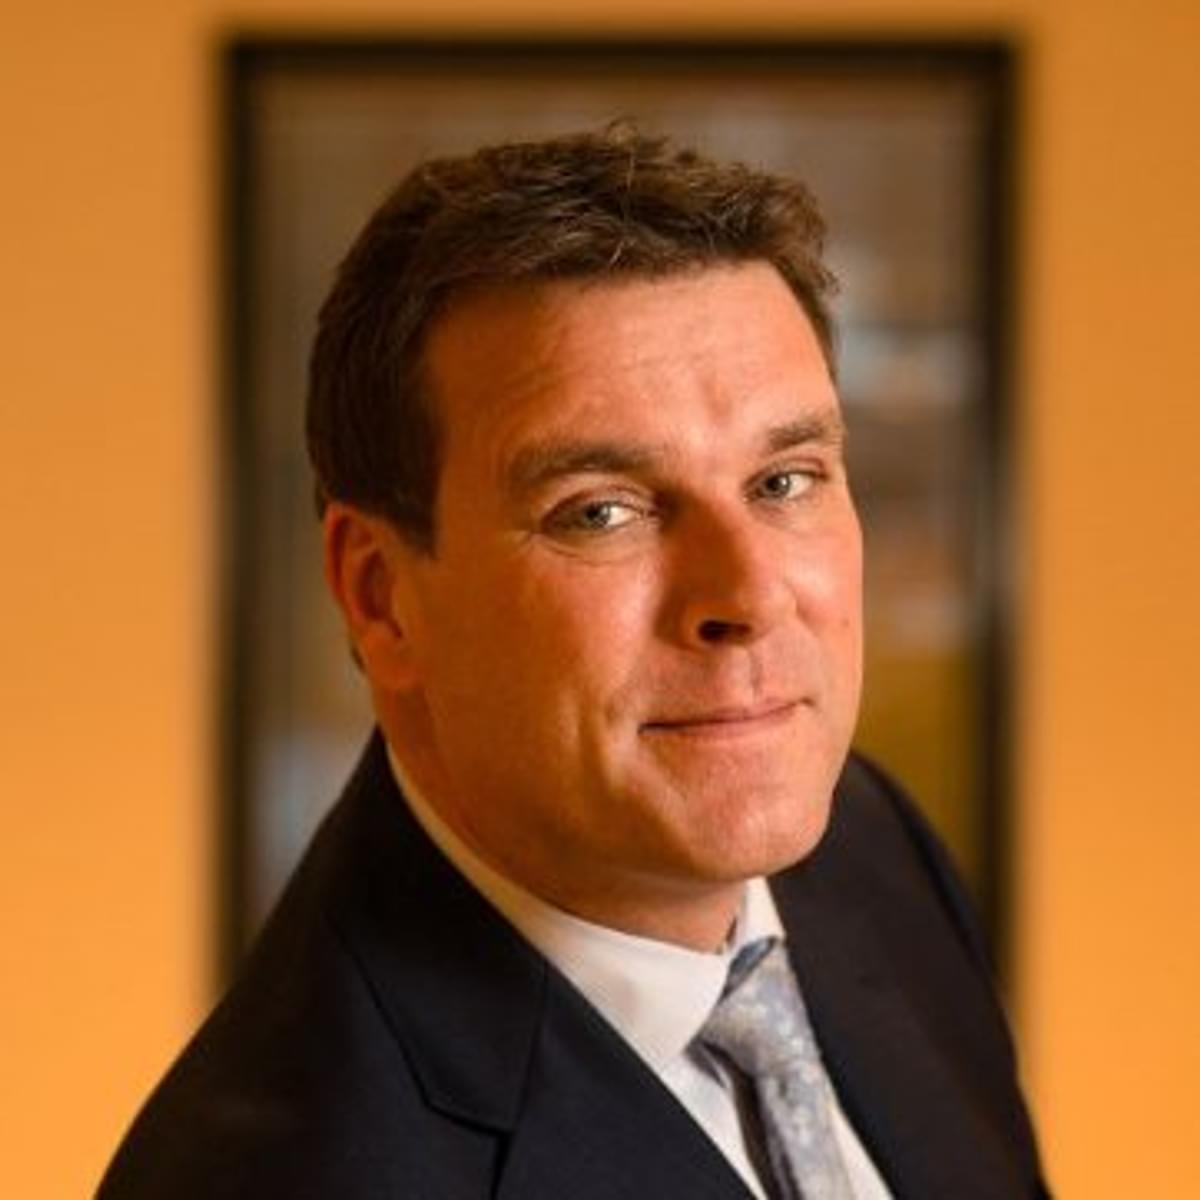 Coen Bos benoemd tot commercial director SAP Nederland image